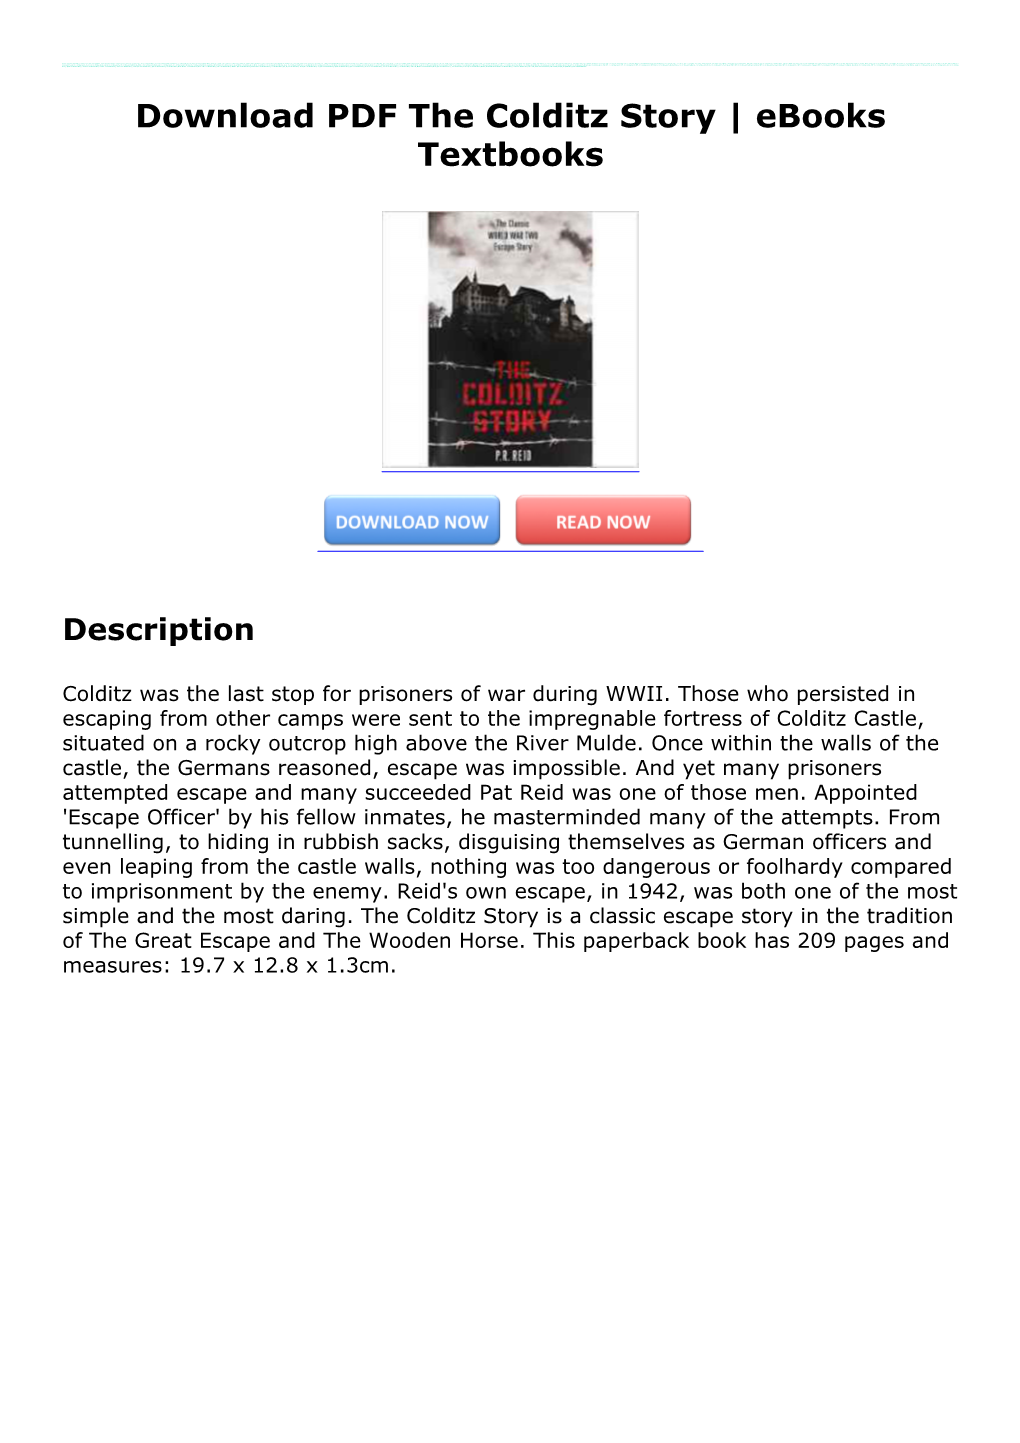 Download PDF the Colditz Story | Ebooks Textbooks